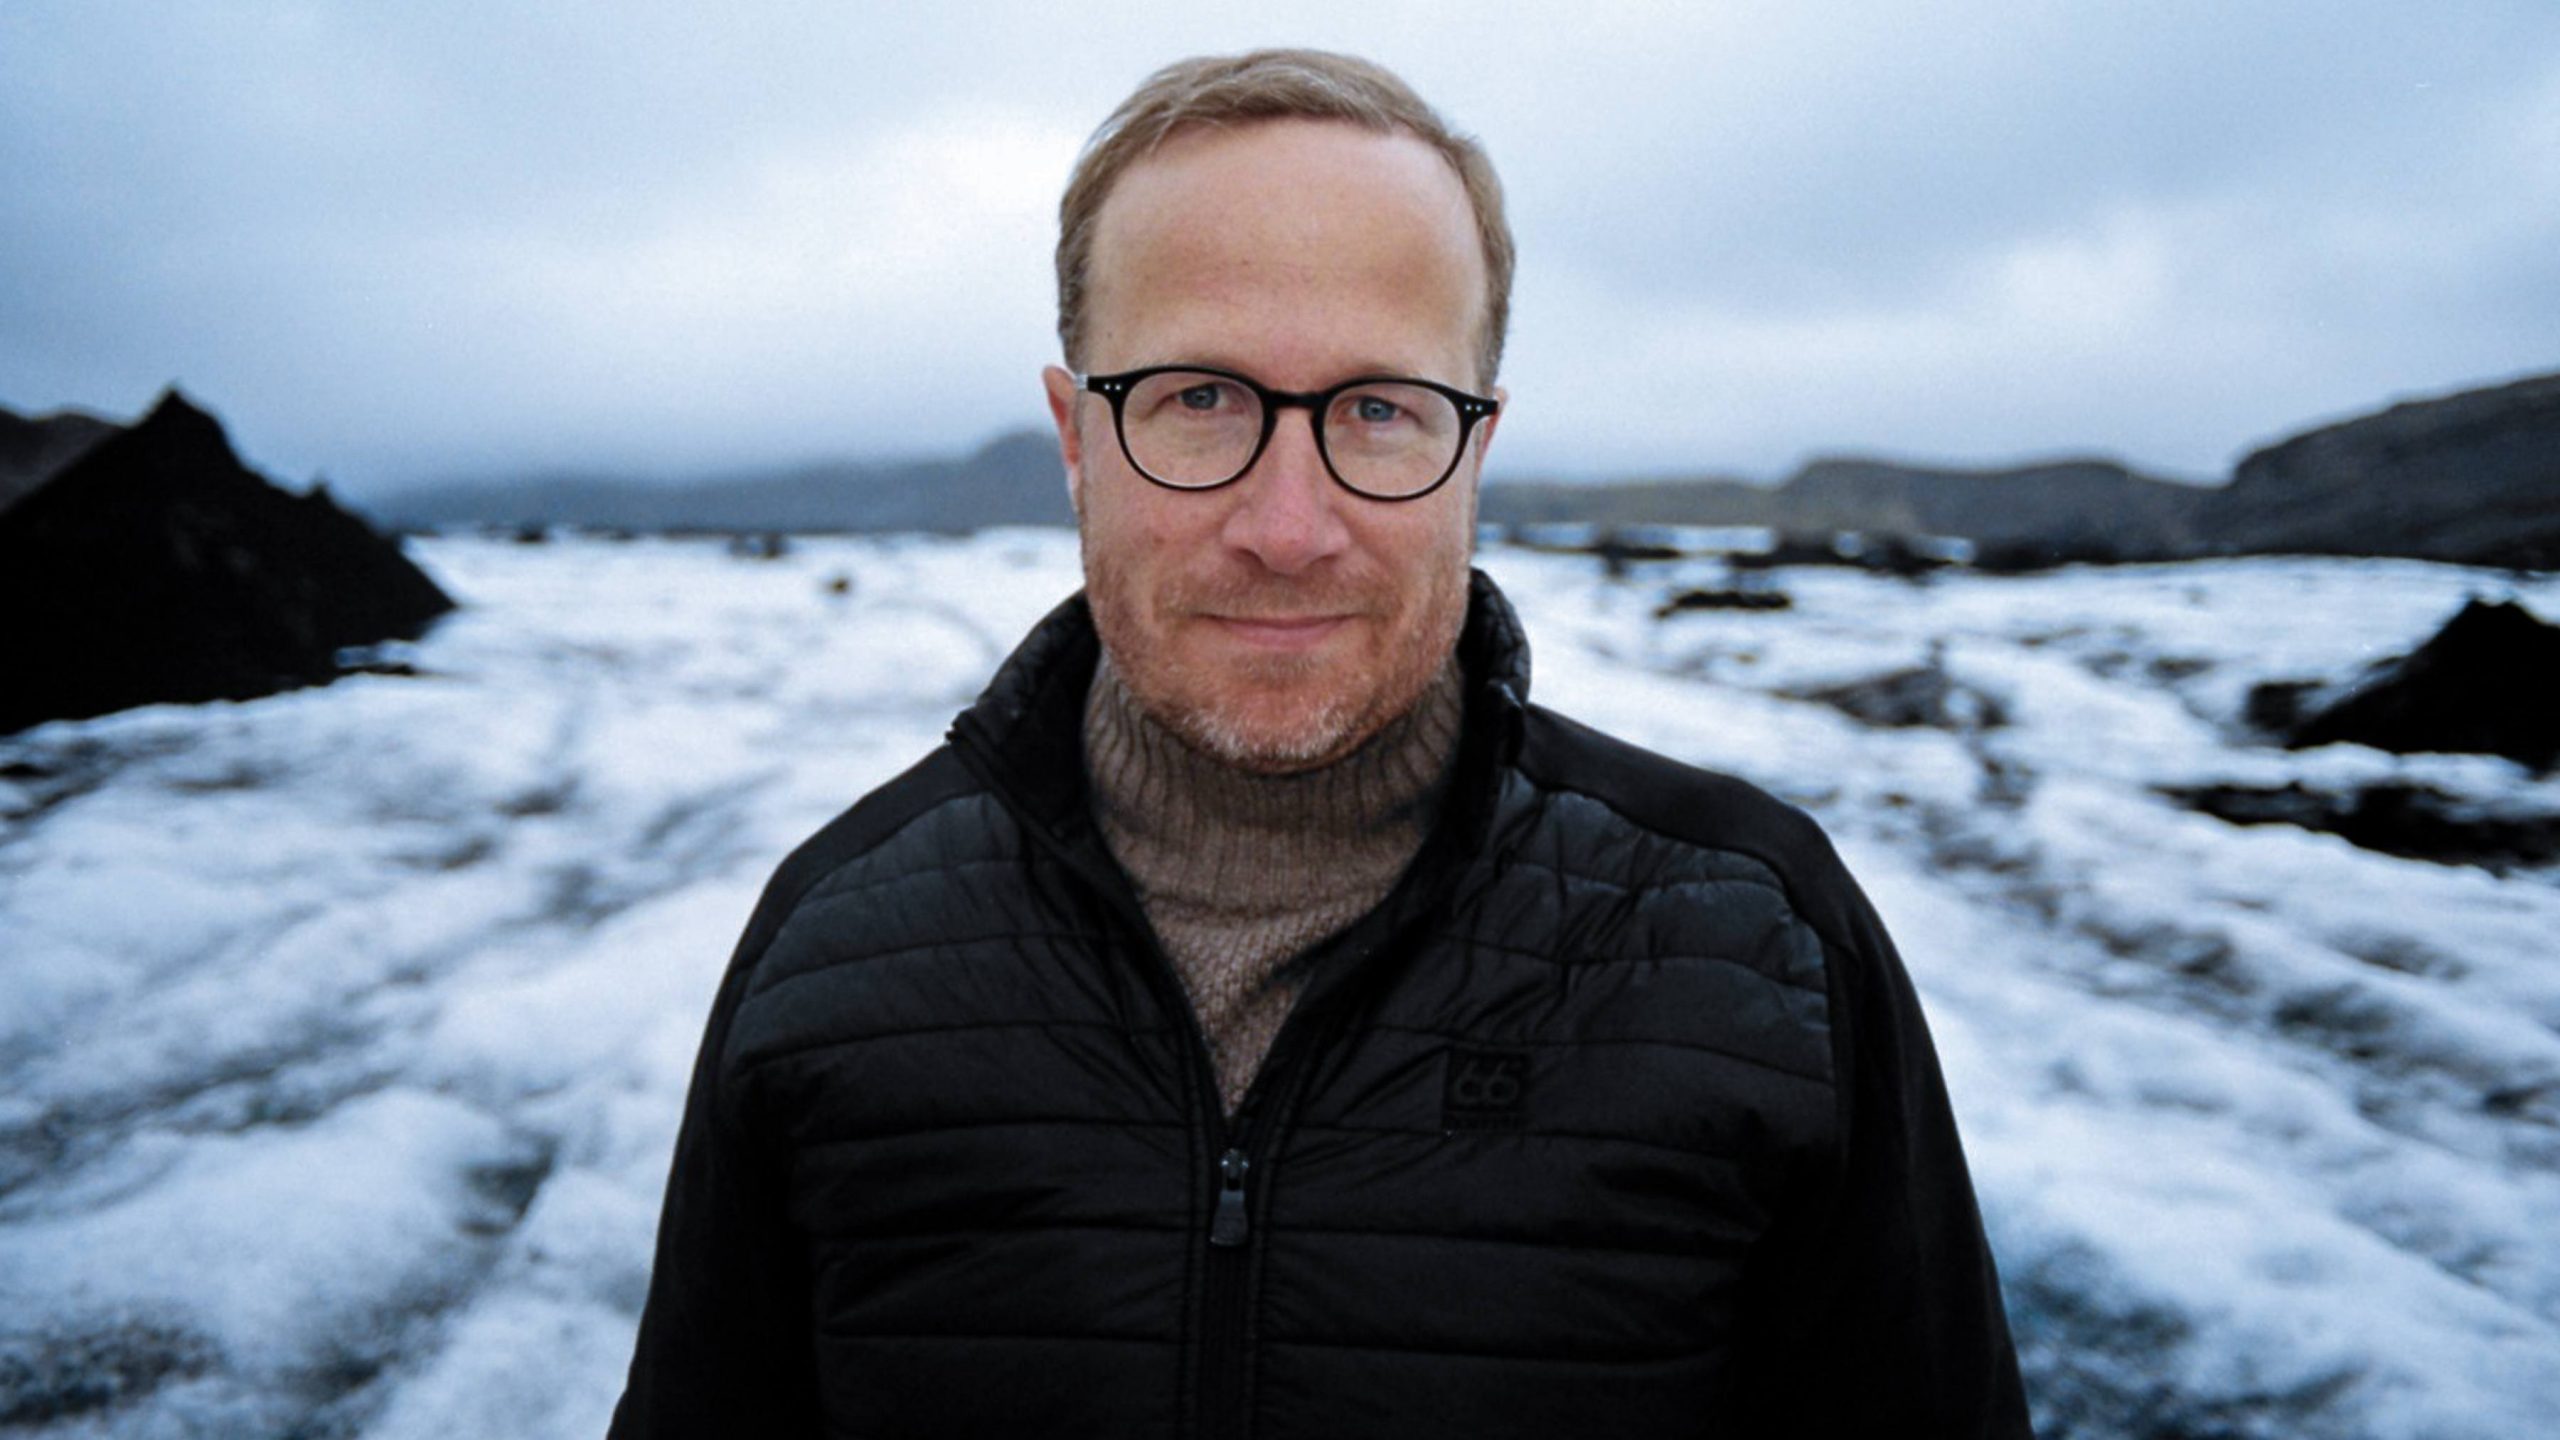 Andri Snær Magnason. A man with glasses on a glacier.